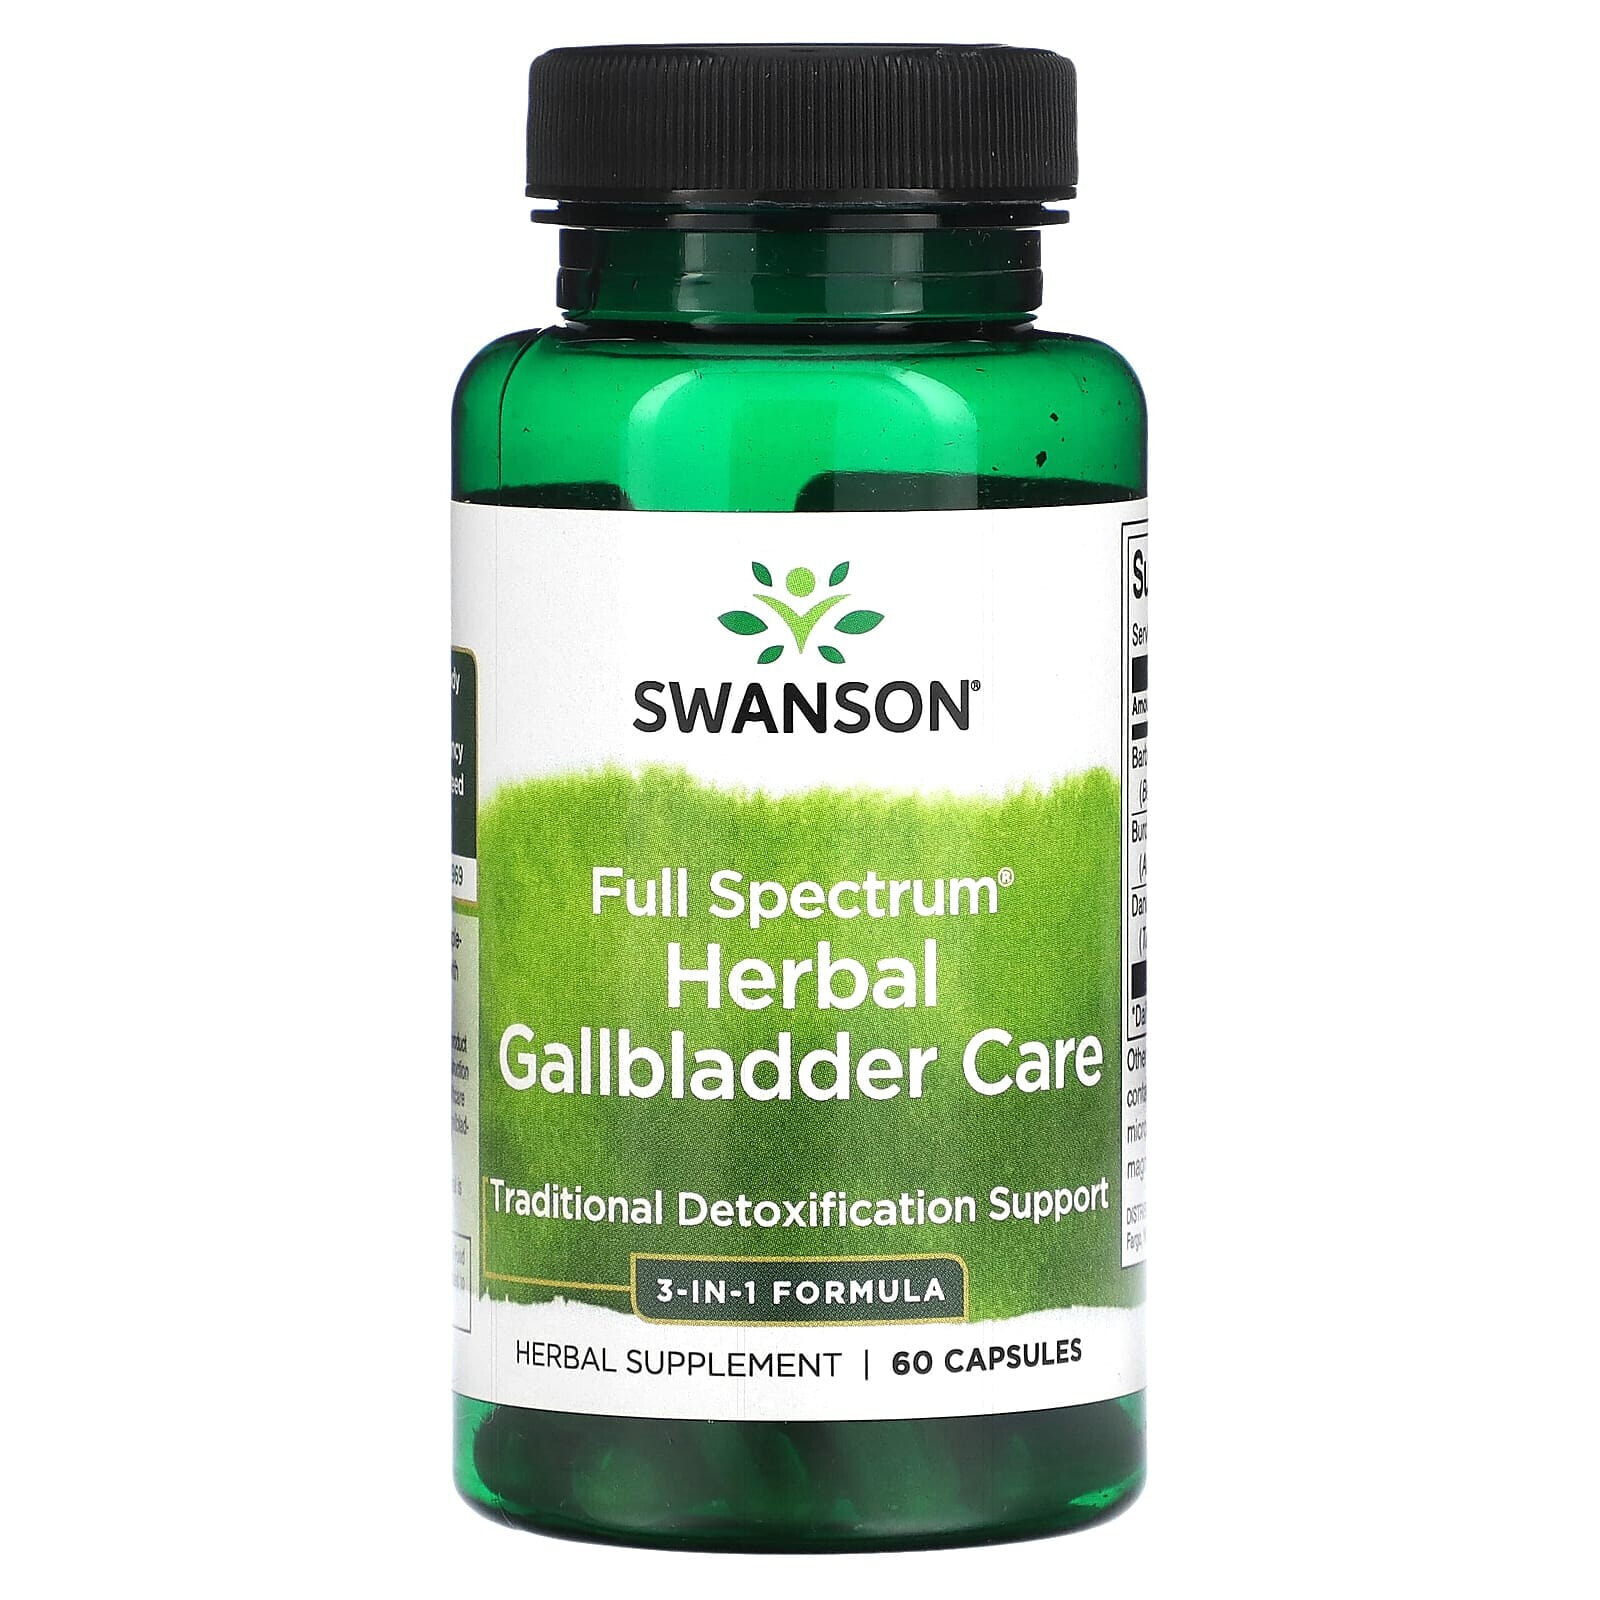 Full Spectrum Herbal Gallbladder Care, 60 Capsules